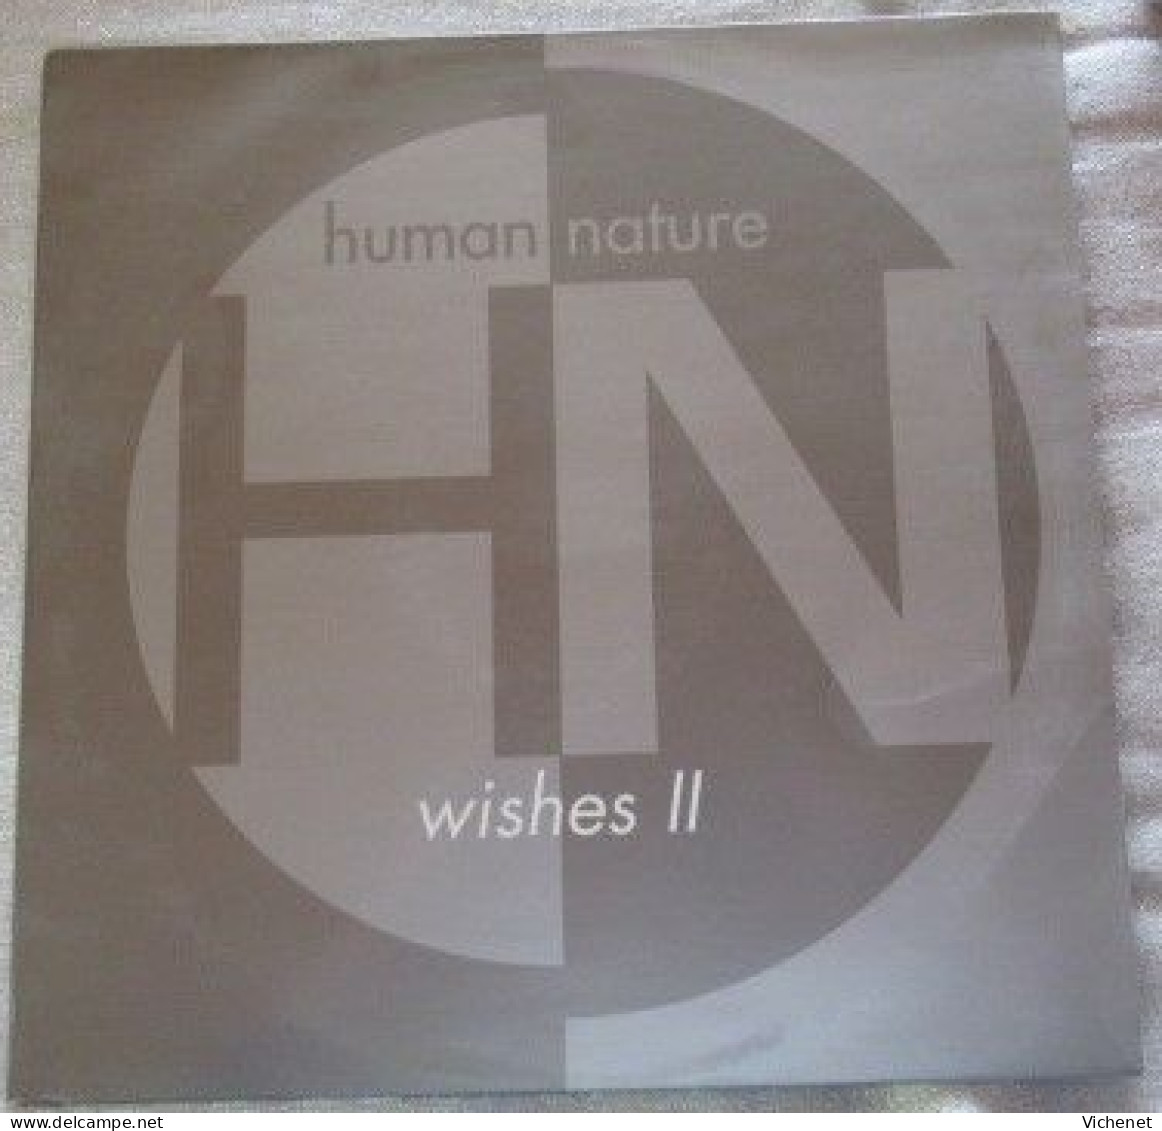 Human Nature – Wishes II - Maxi - 45 T - Maxi-Single